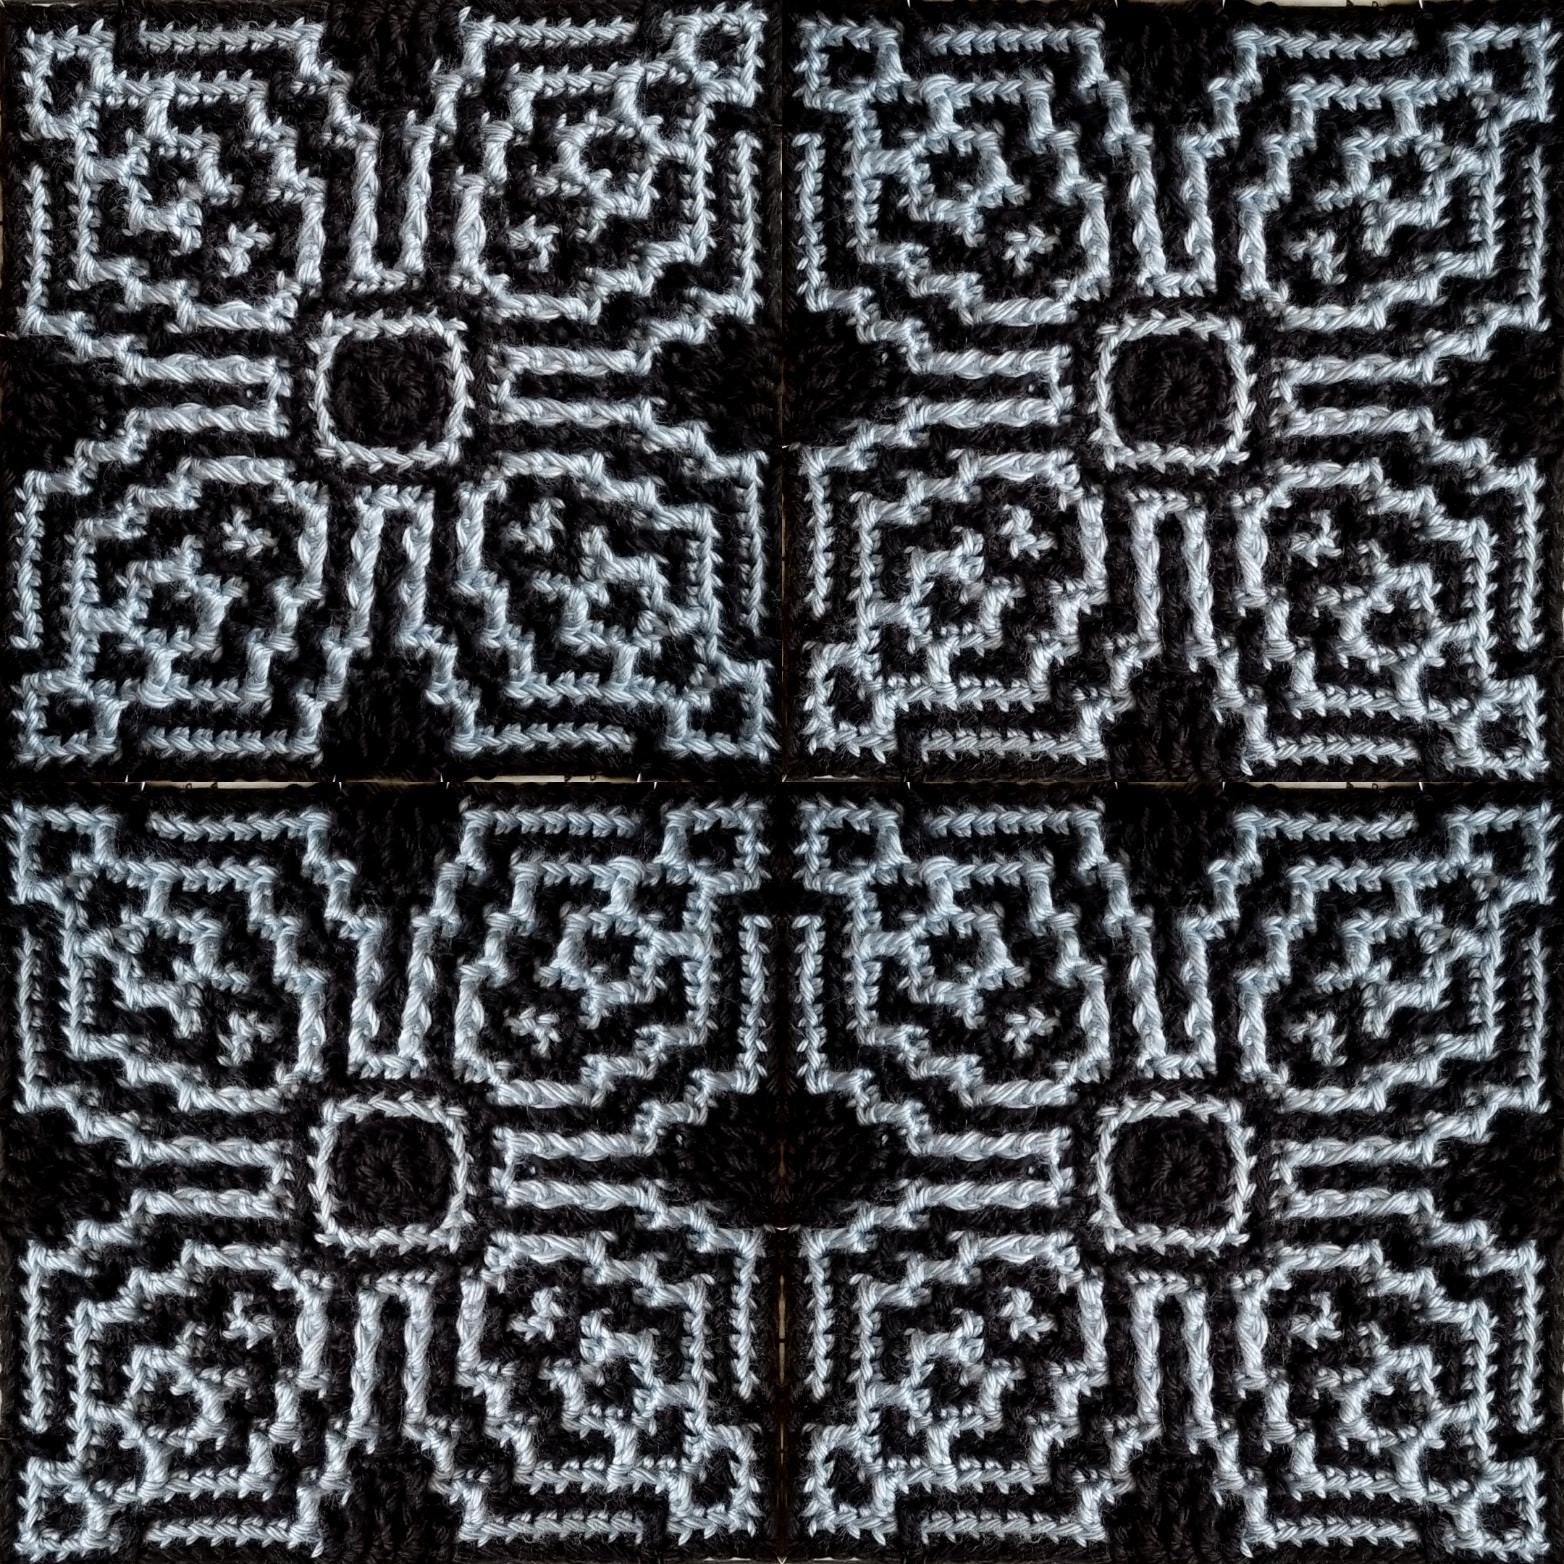 Flora Collection: Set of 12 Mosaic Crochet Patterns 